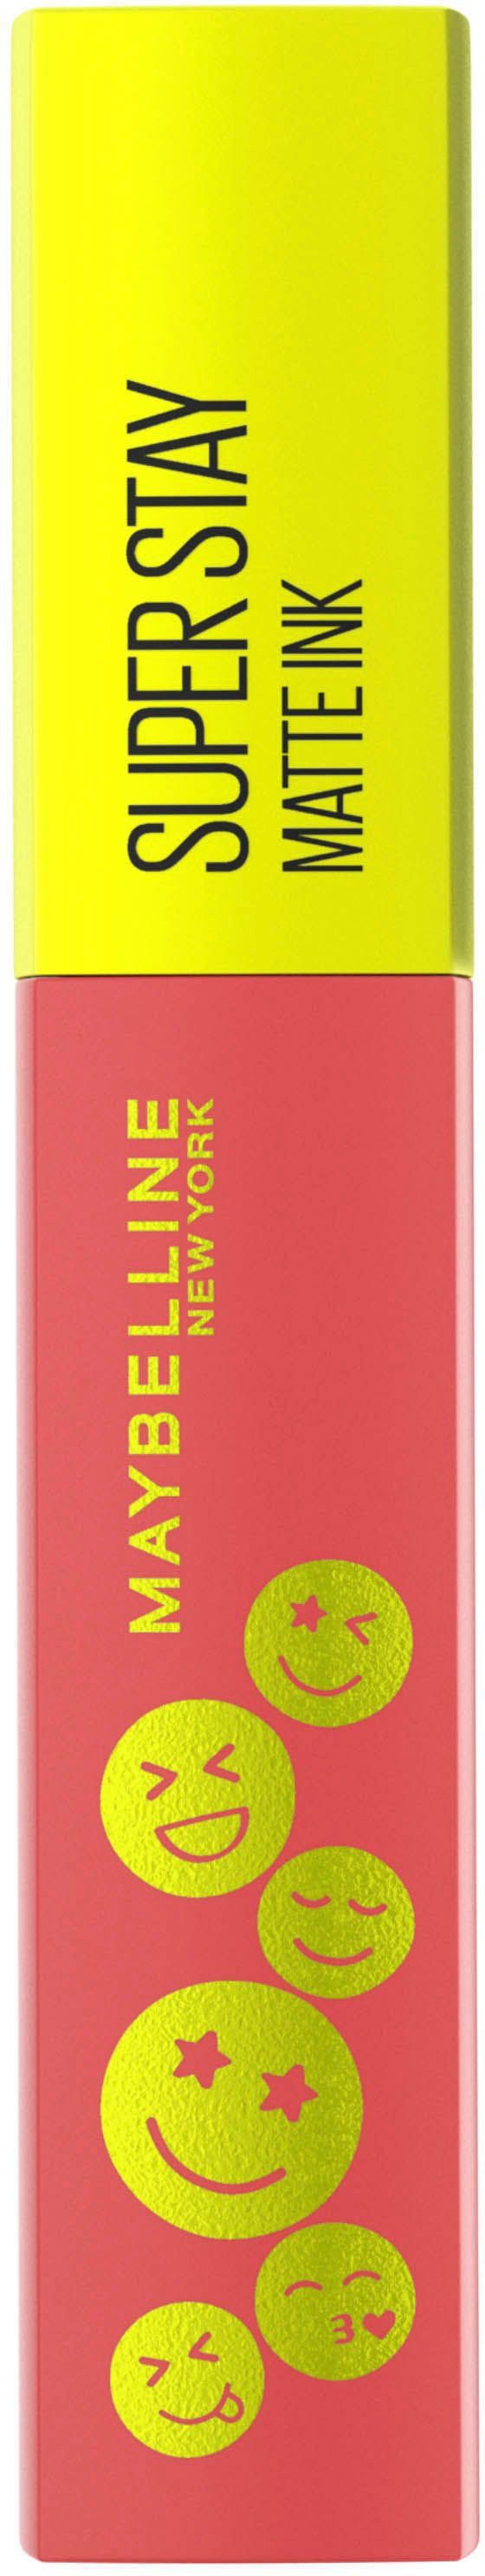 Maybelline Lippenstift Matte Stay Ink NEW YORK New Super York MAYBELLINE Lippenstift